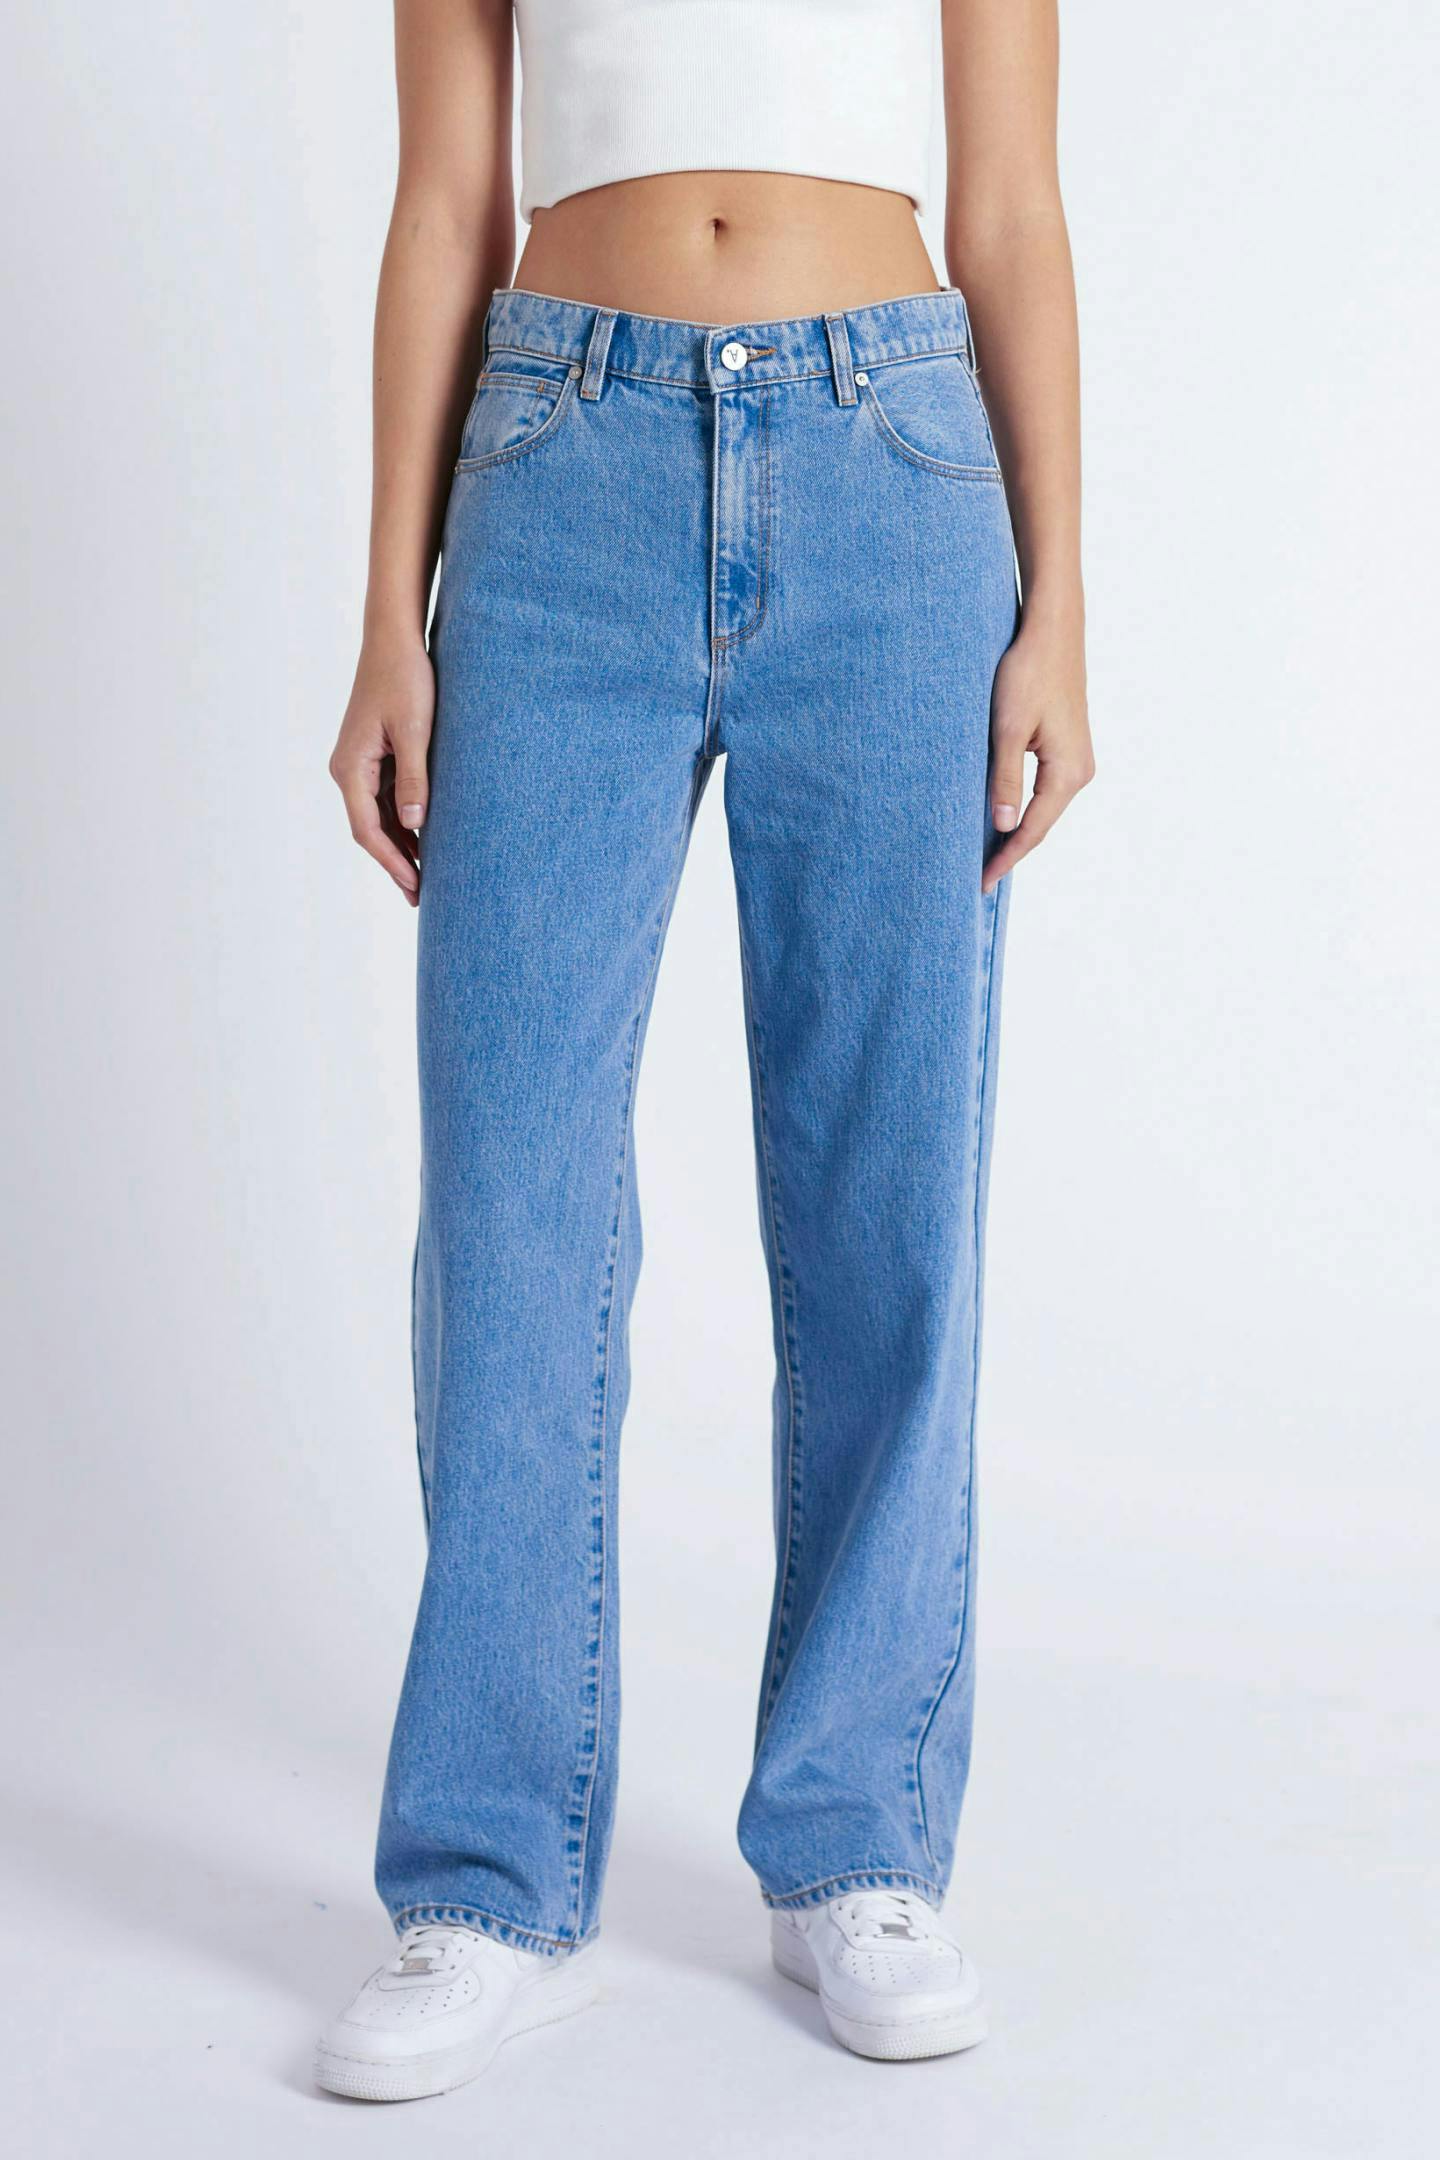 Denim Jeans For Women | Women's Jeans Australia | Abrand AU